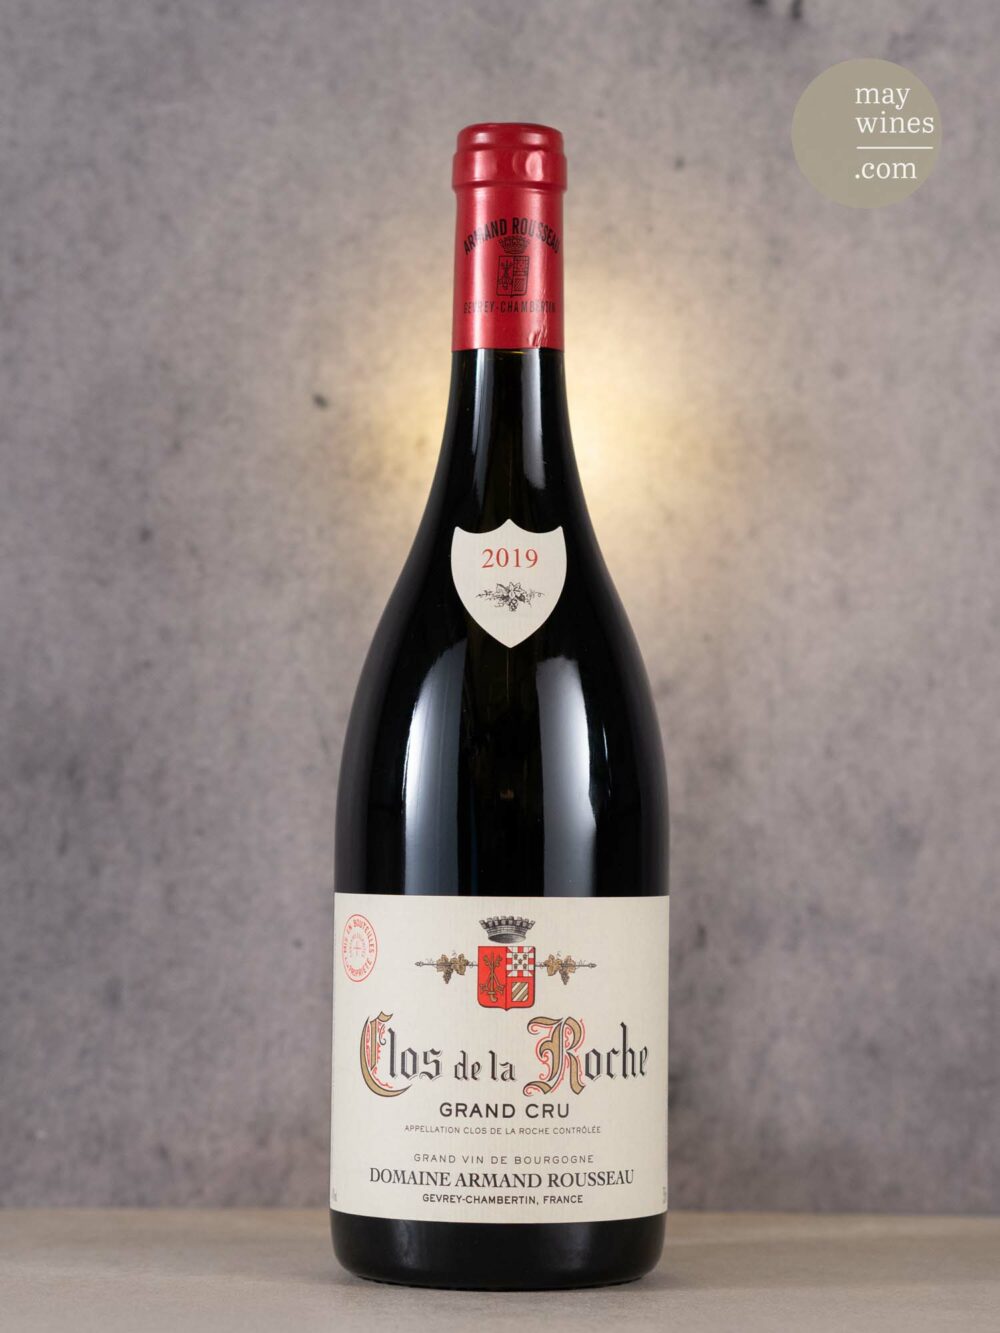 May Wines – Rotwein – 2019 Clos de la Roche Grand Cru  - Domaine Armand Rousseau